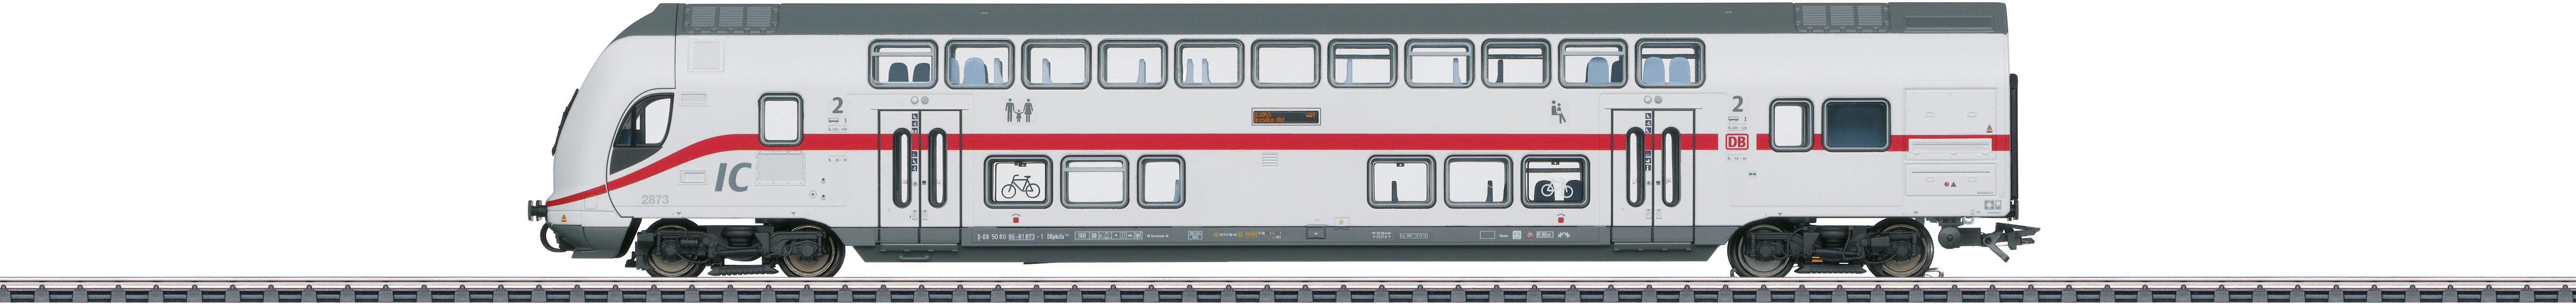 Märklin Personenwagen IC2 Doppelstock-Steuerwagen DBpbzfa 668.2, 2. Klasse - 43488, Spur H0, Made in Europe